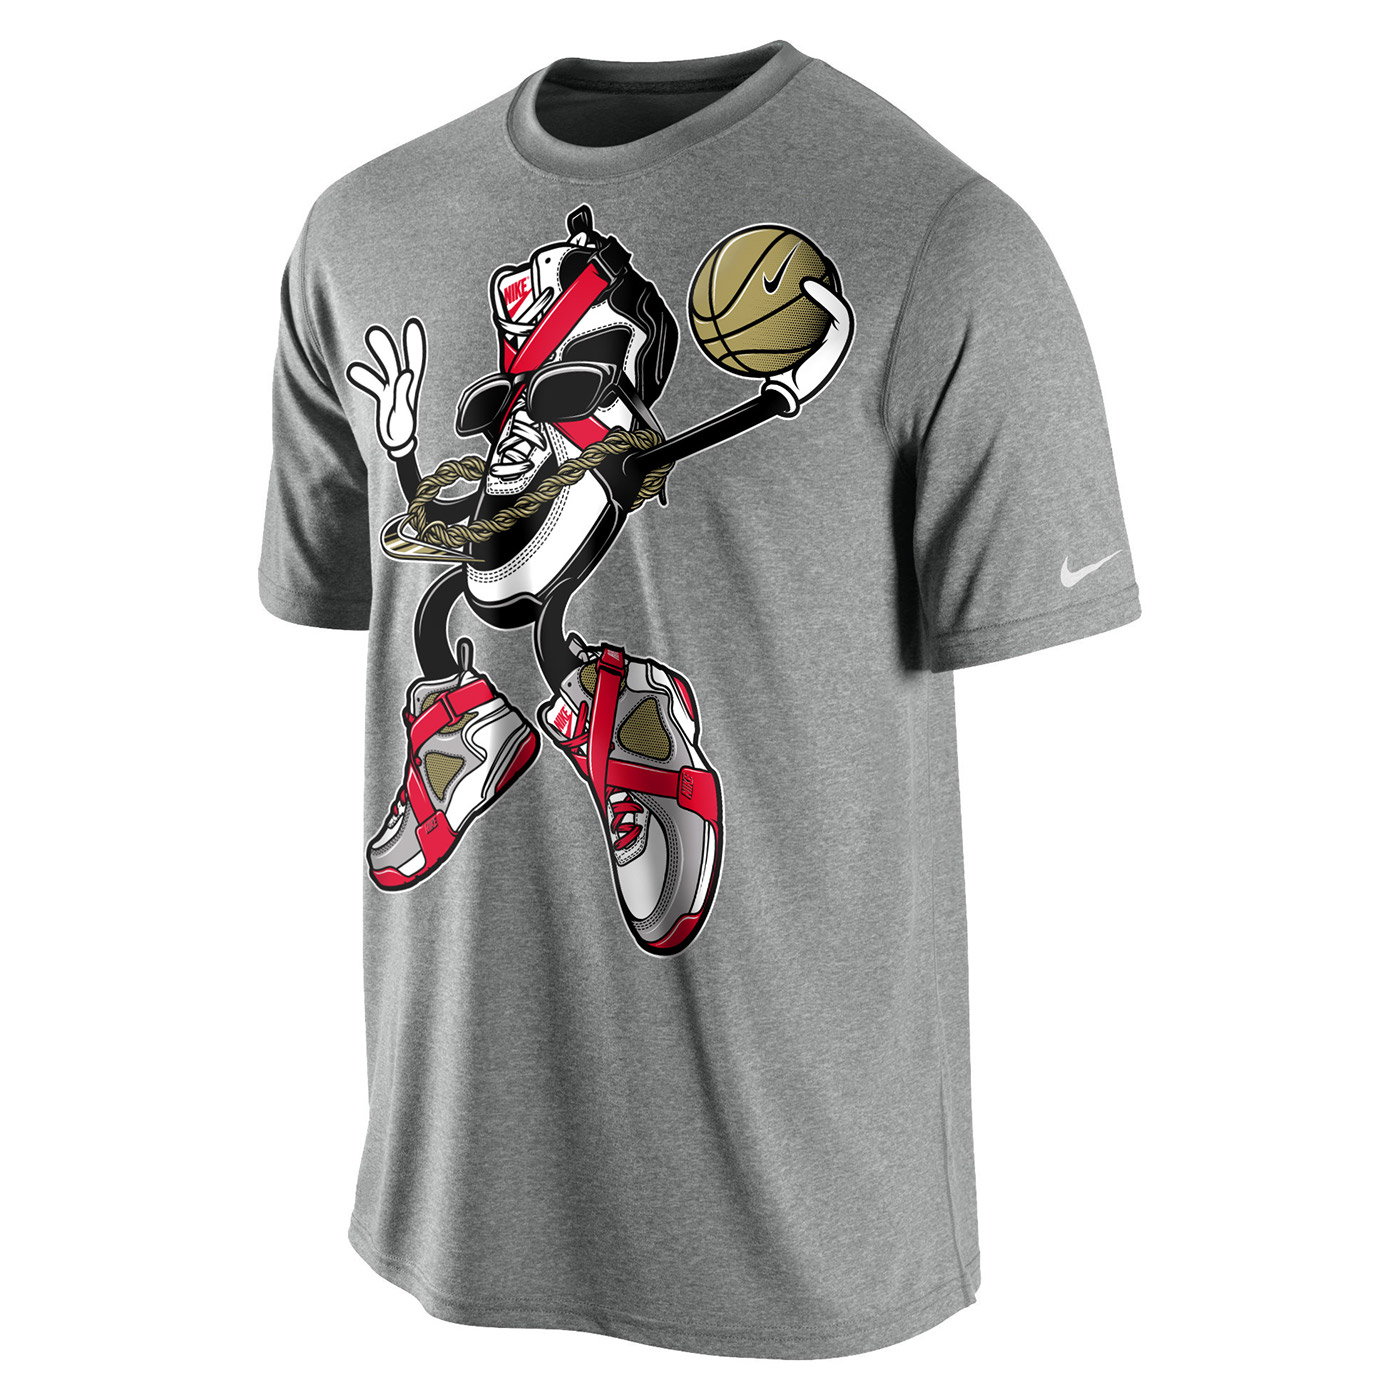 Nike t-shirts design ILLUSTRATION  basketball football soccer sneakers athletes rusc